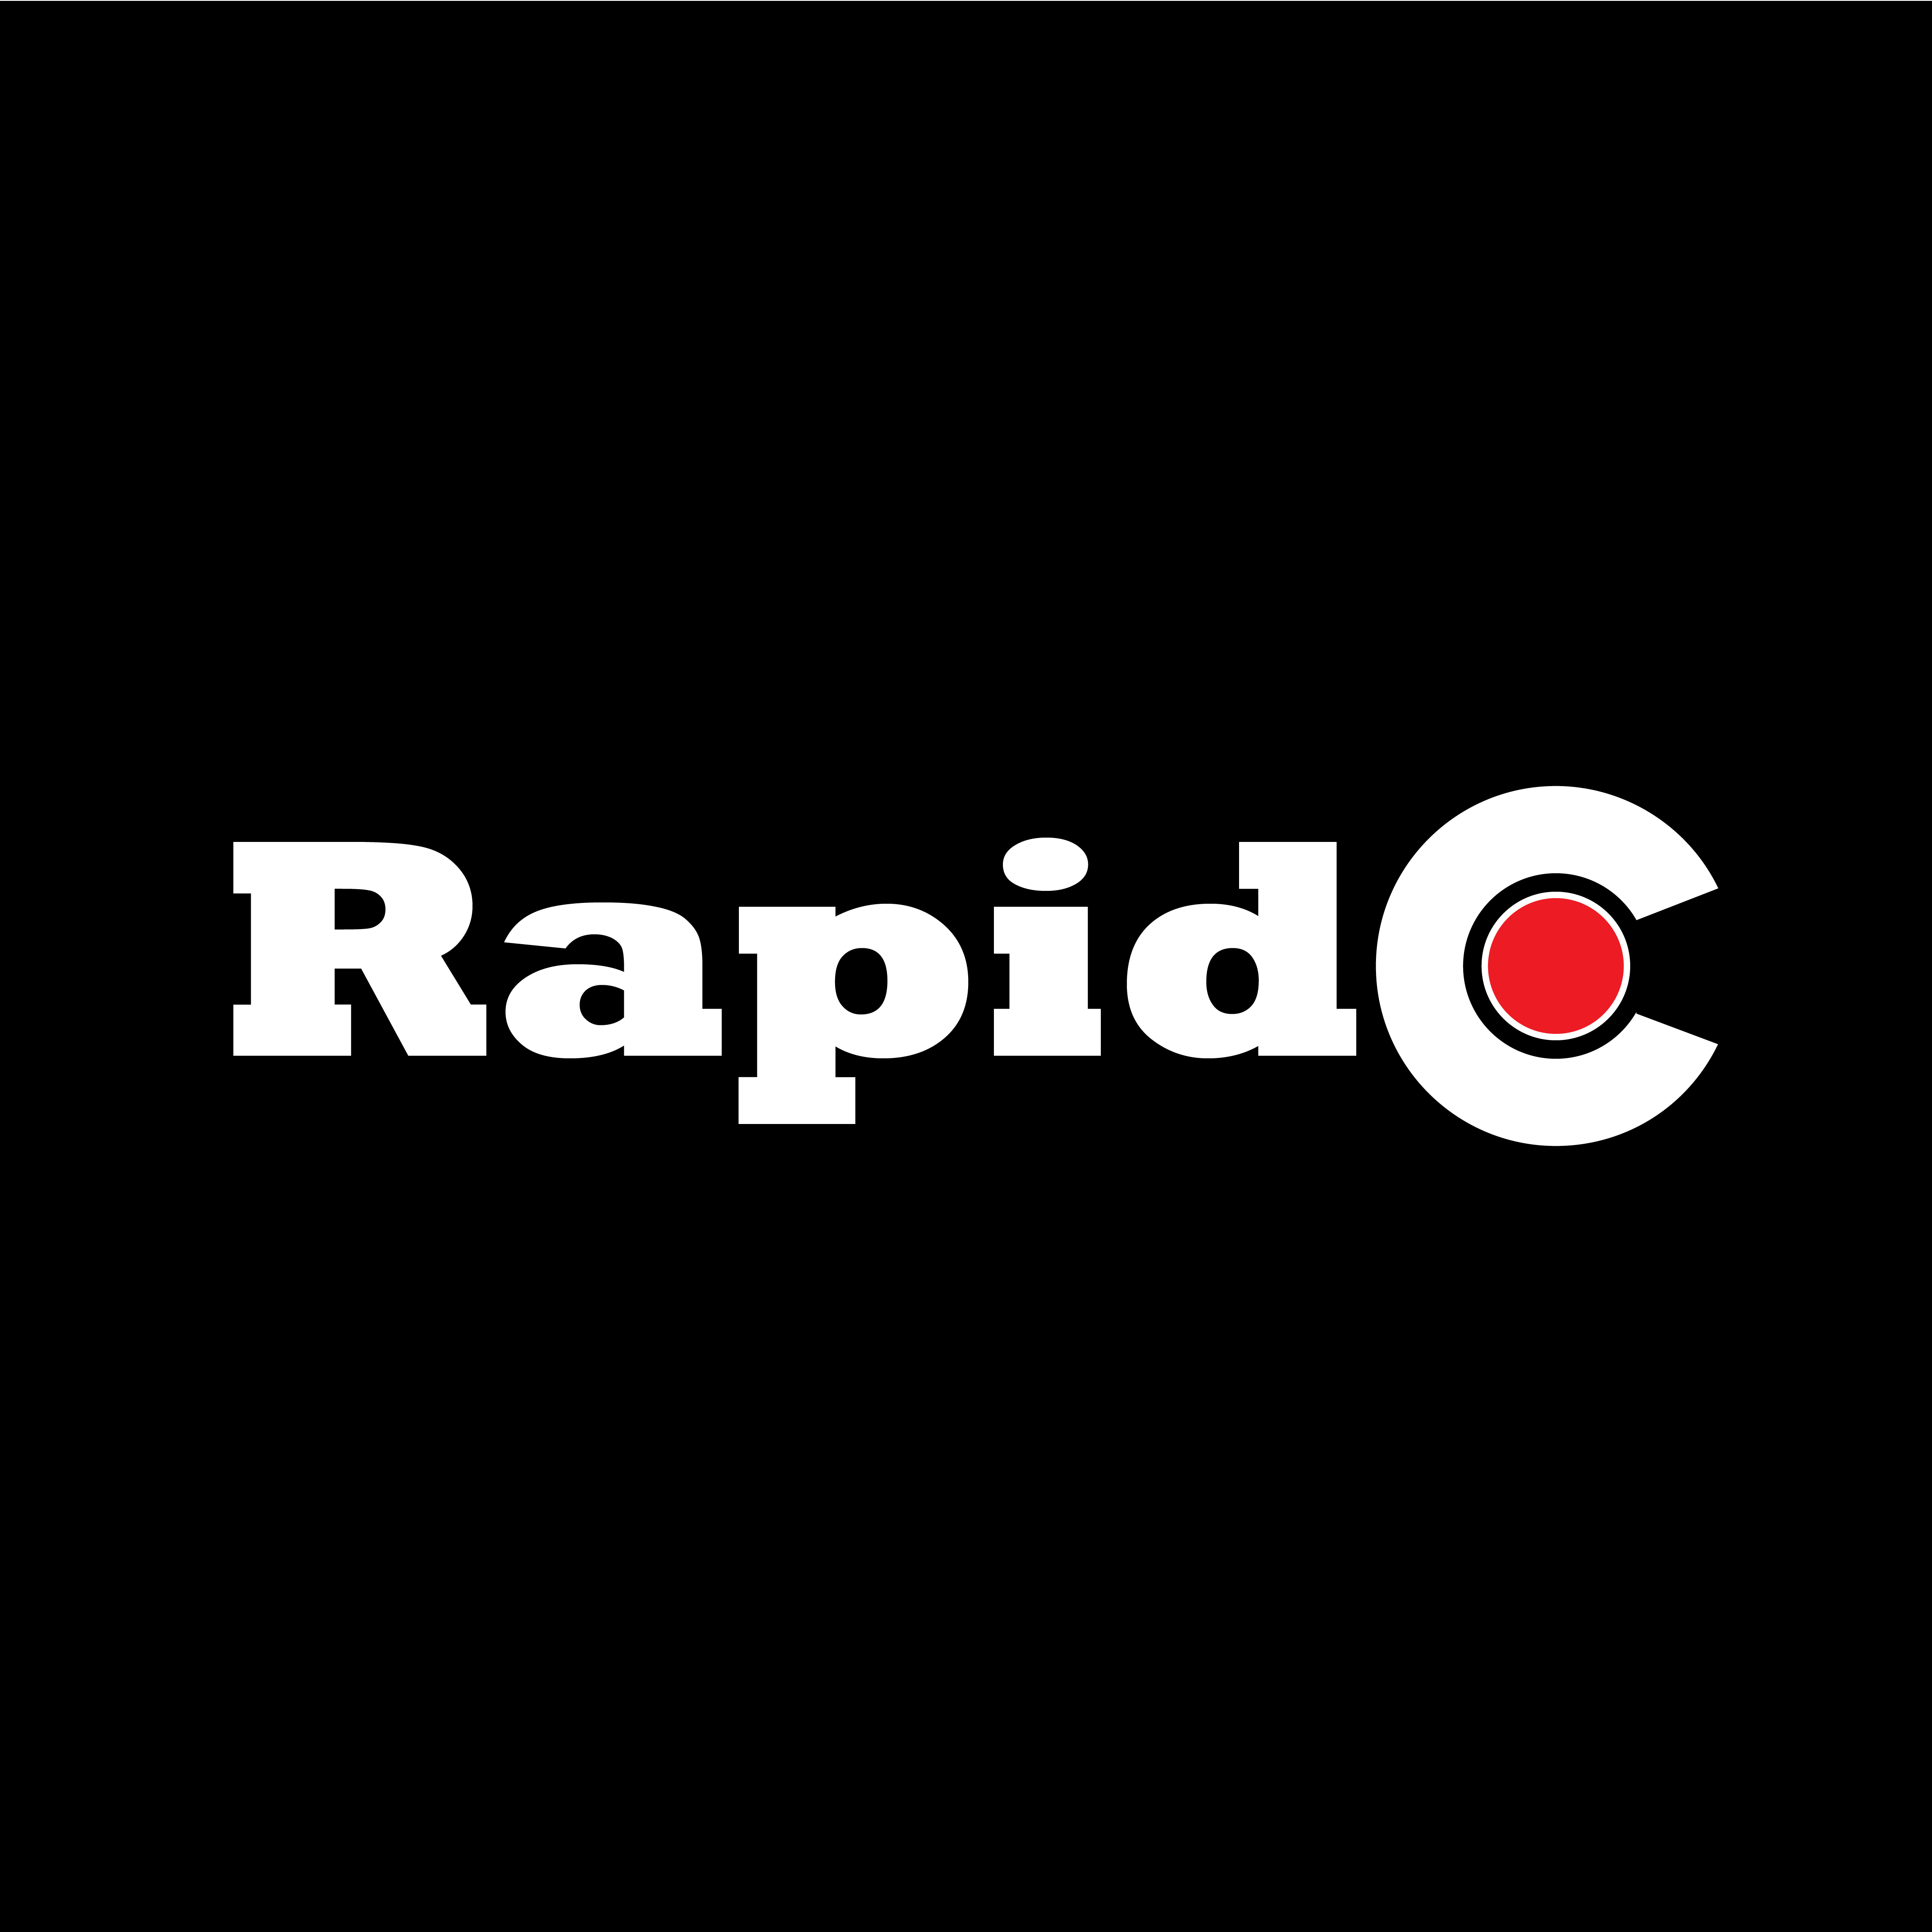 Rapid co logo white (High resolution – CMYK) JPG – Global Logistics ...